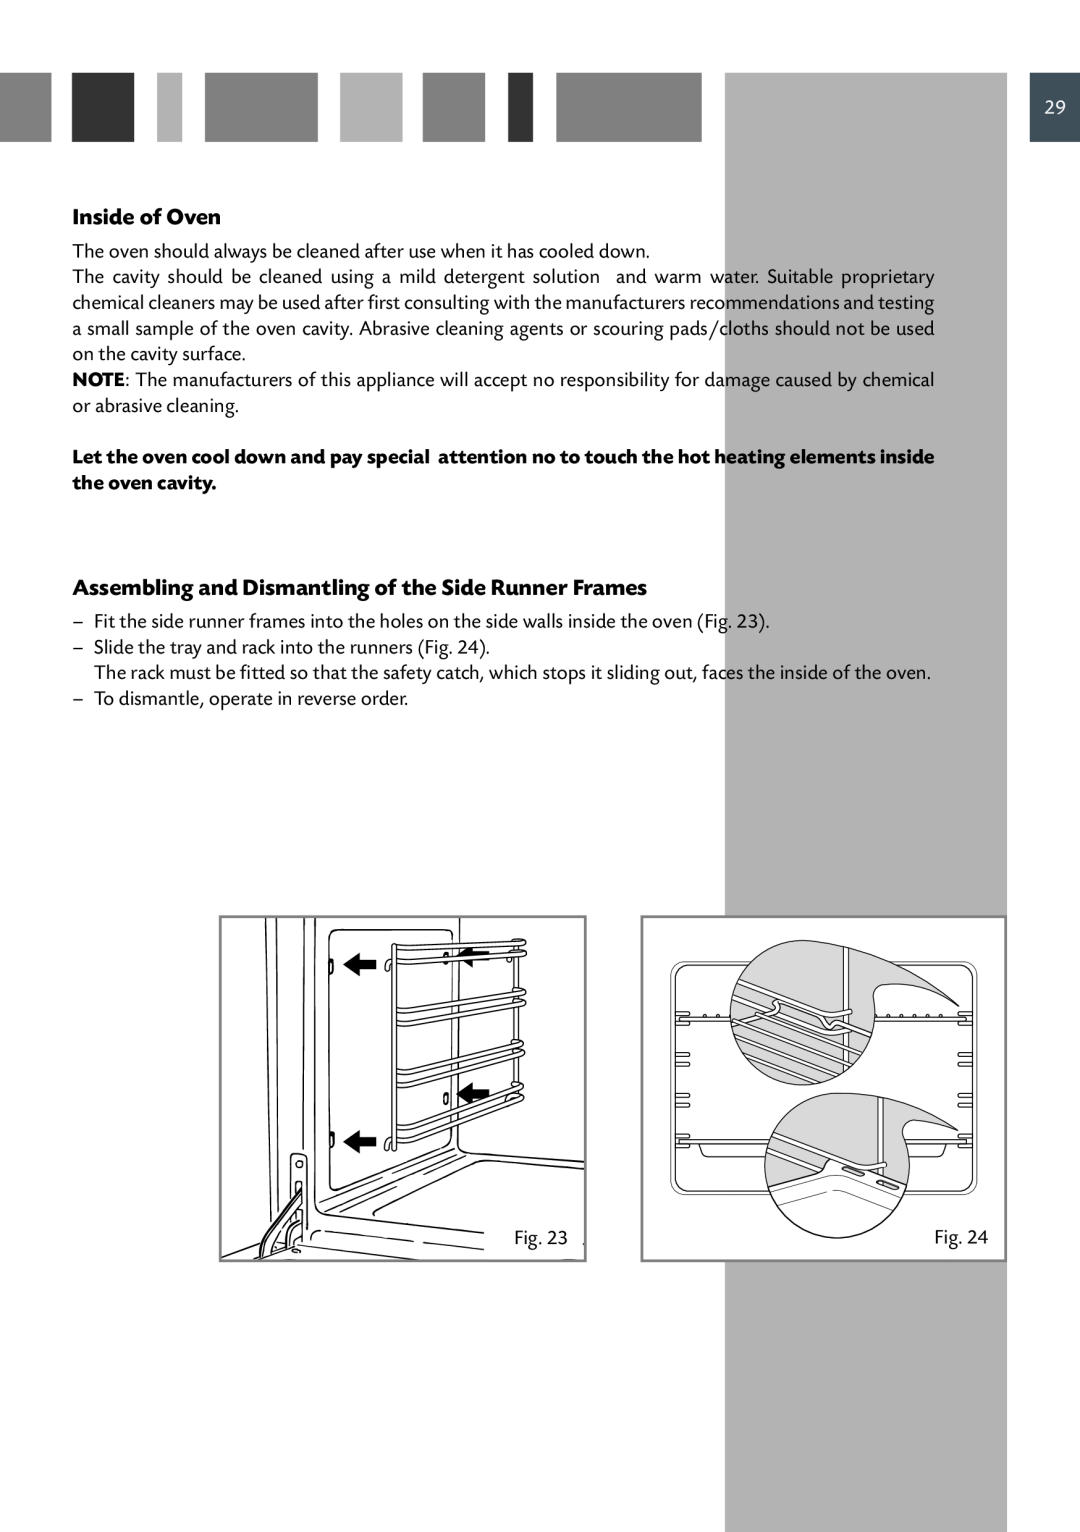 CDA RV 1001, RV 901 manual Inside of Oven, Assembling and Dismantling of the Side Runner Frames 